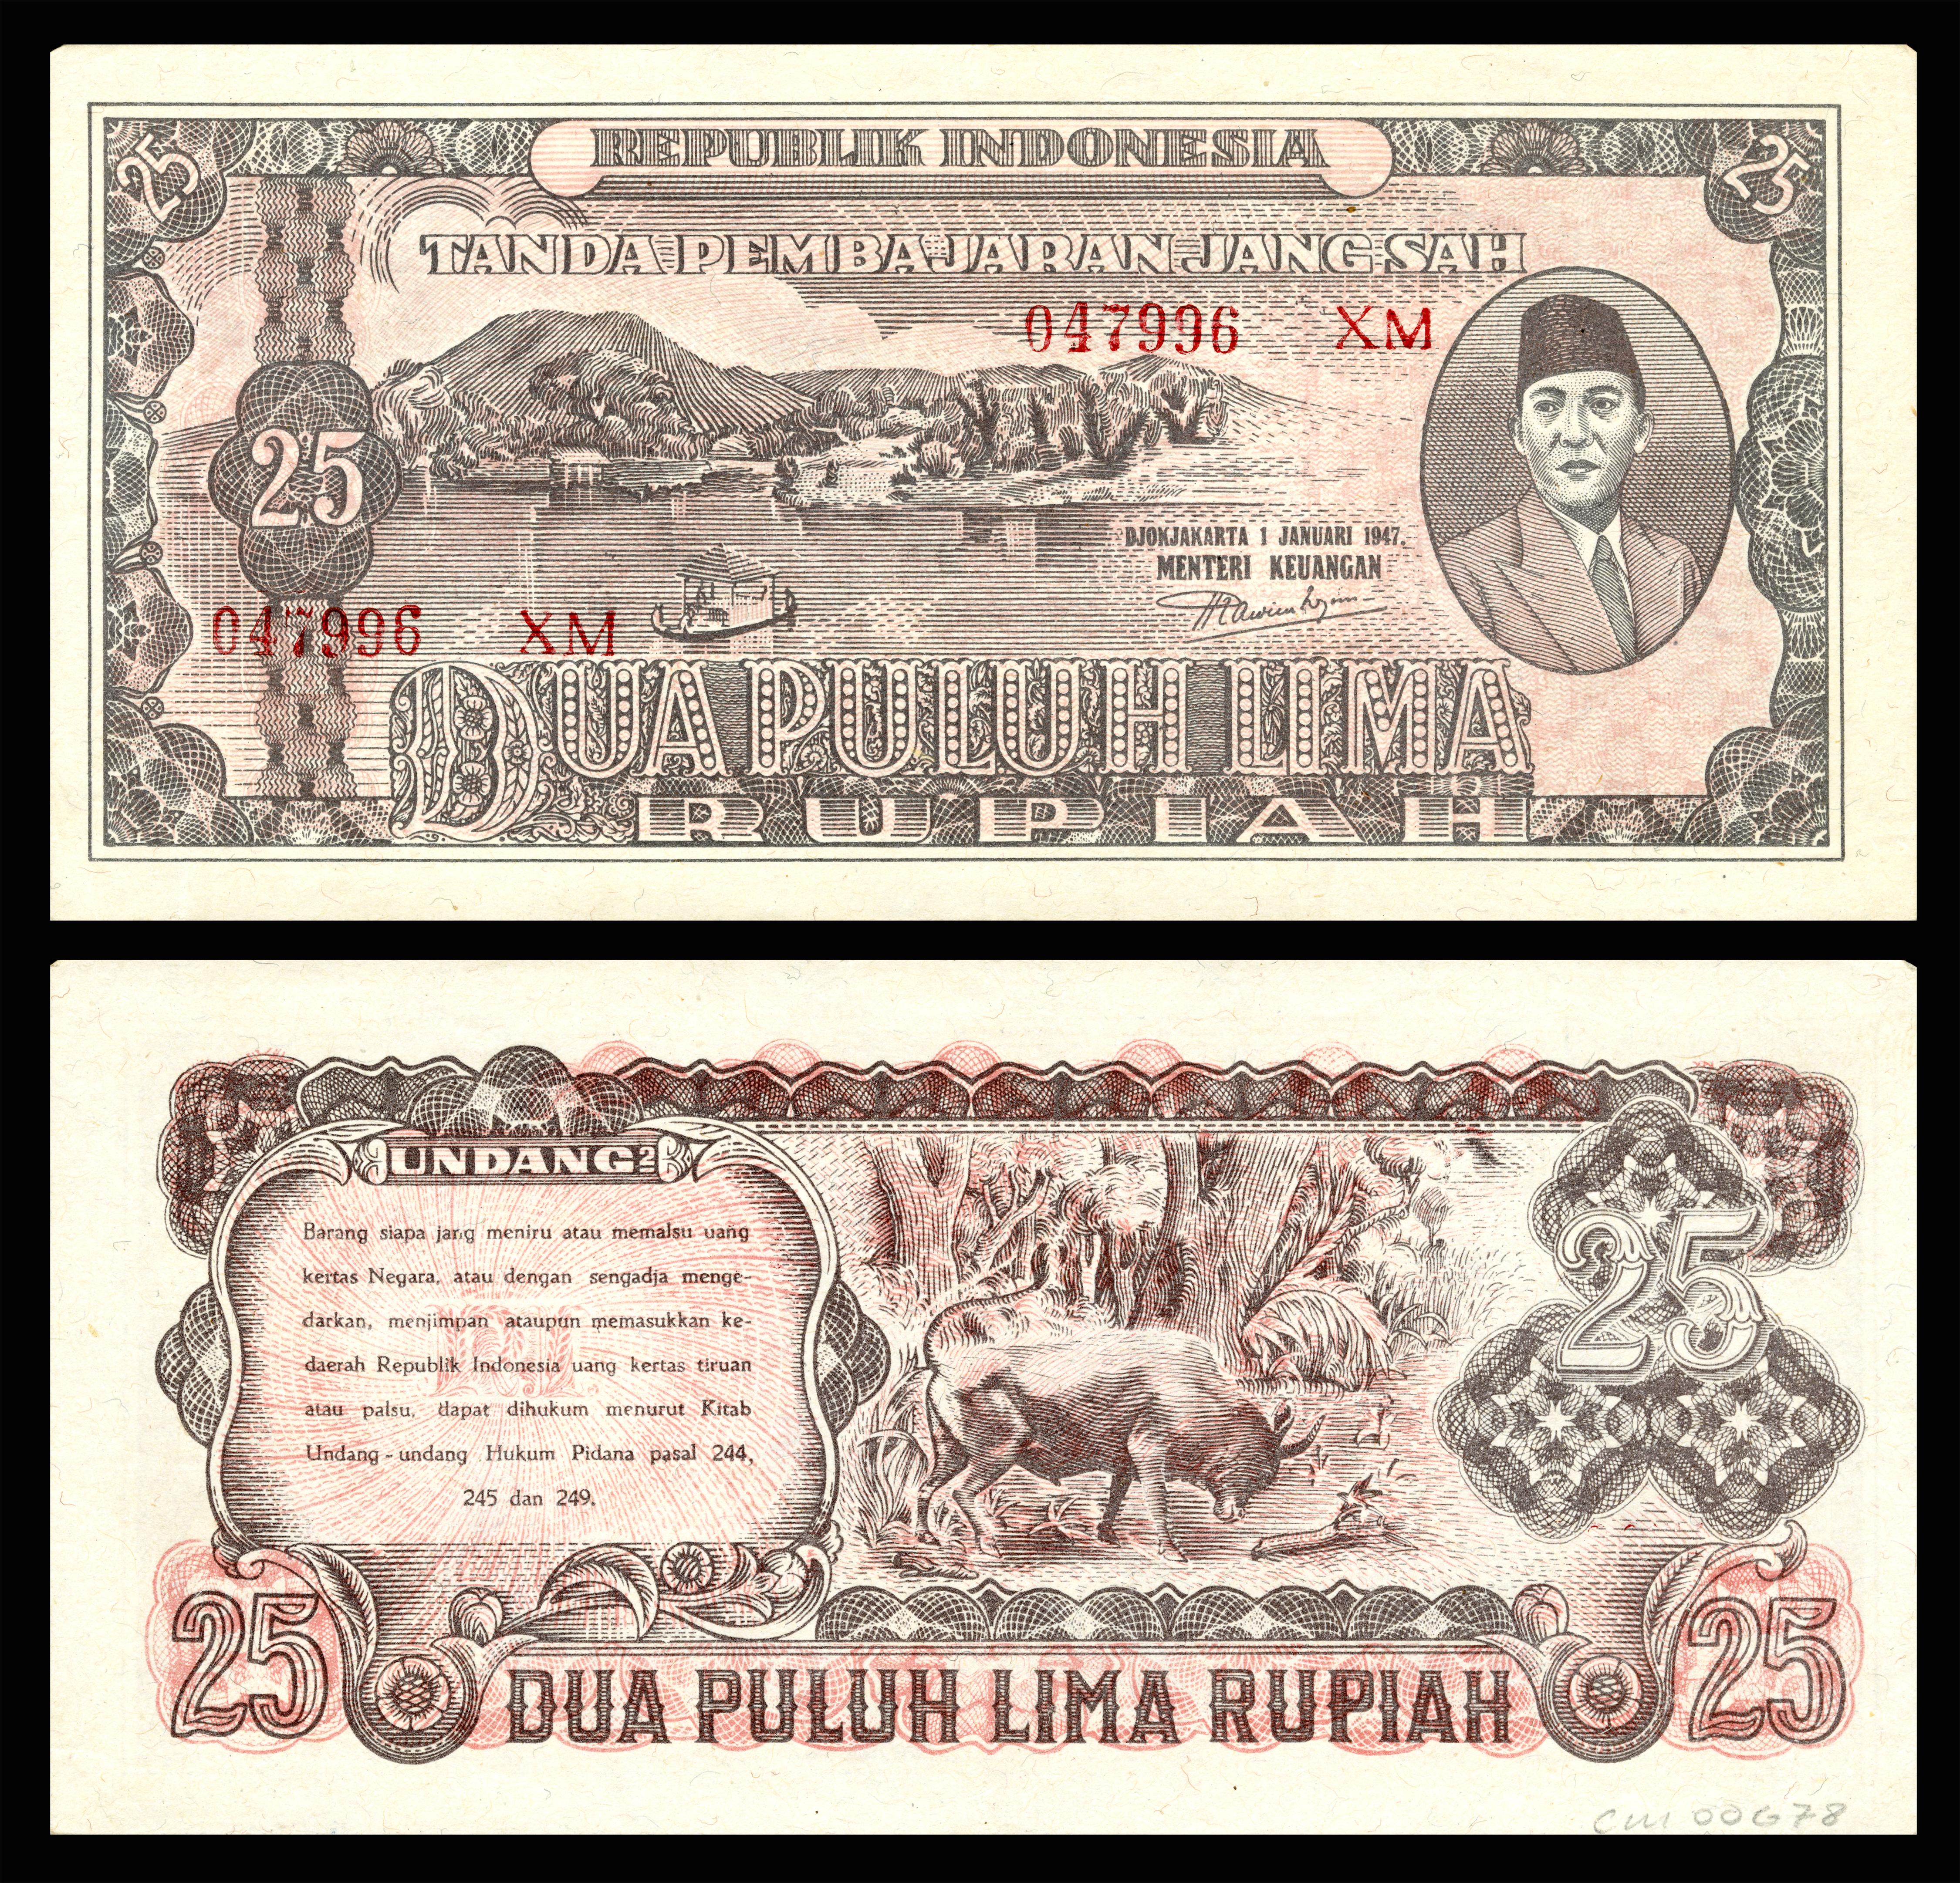 IND-23-Republik Indonesia-25 Rupiah (1947)